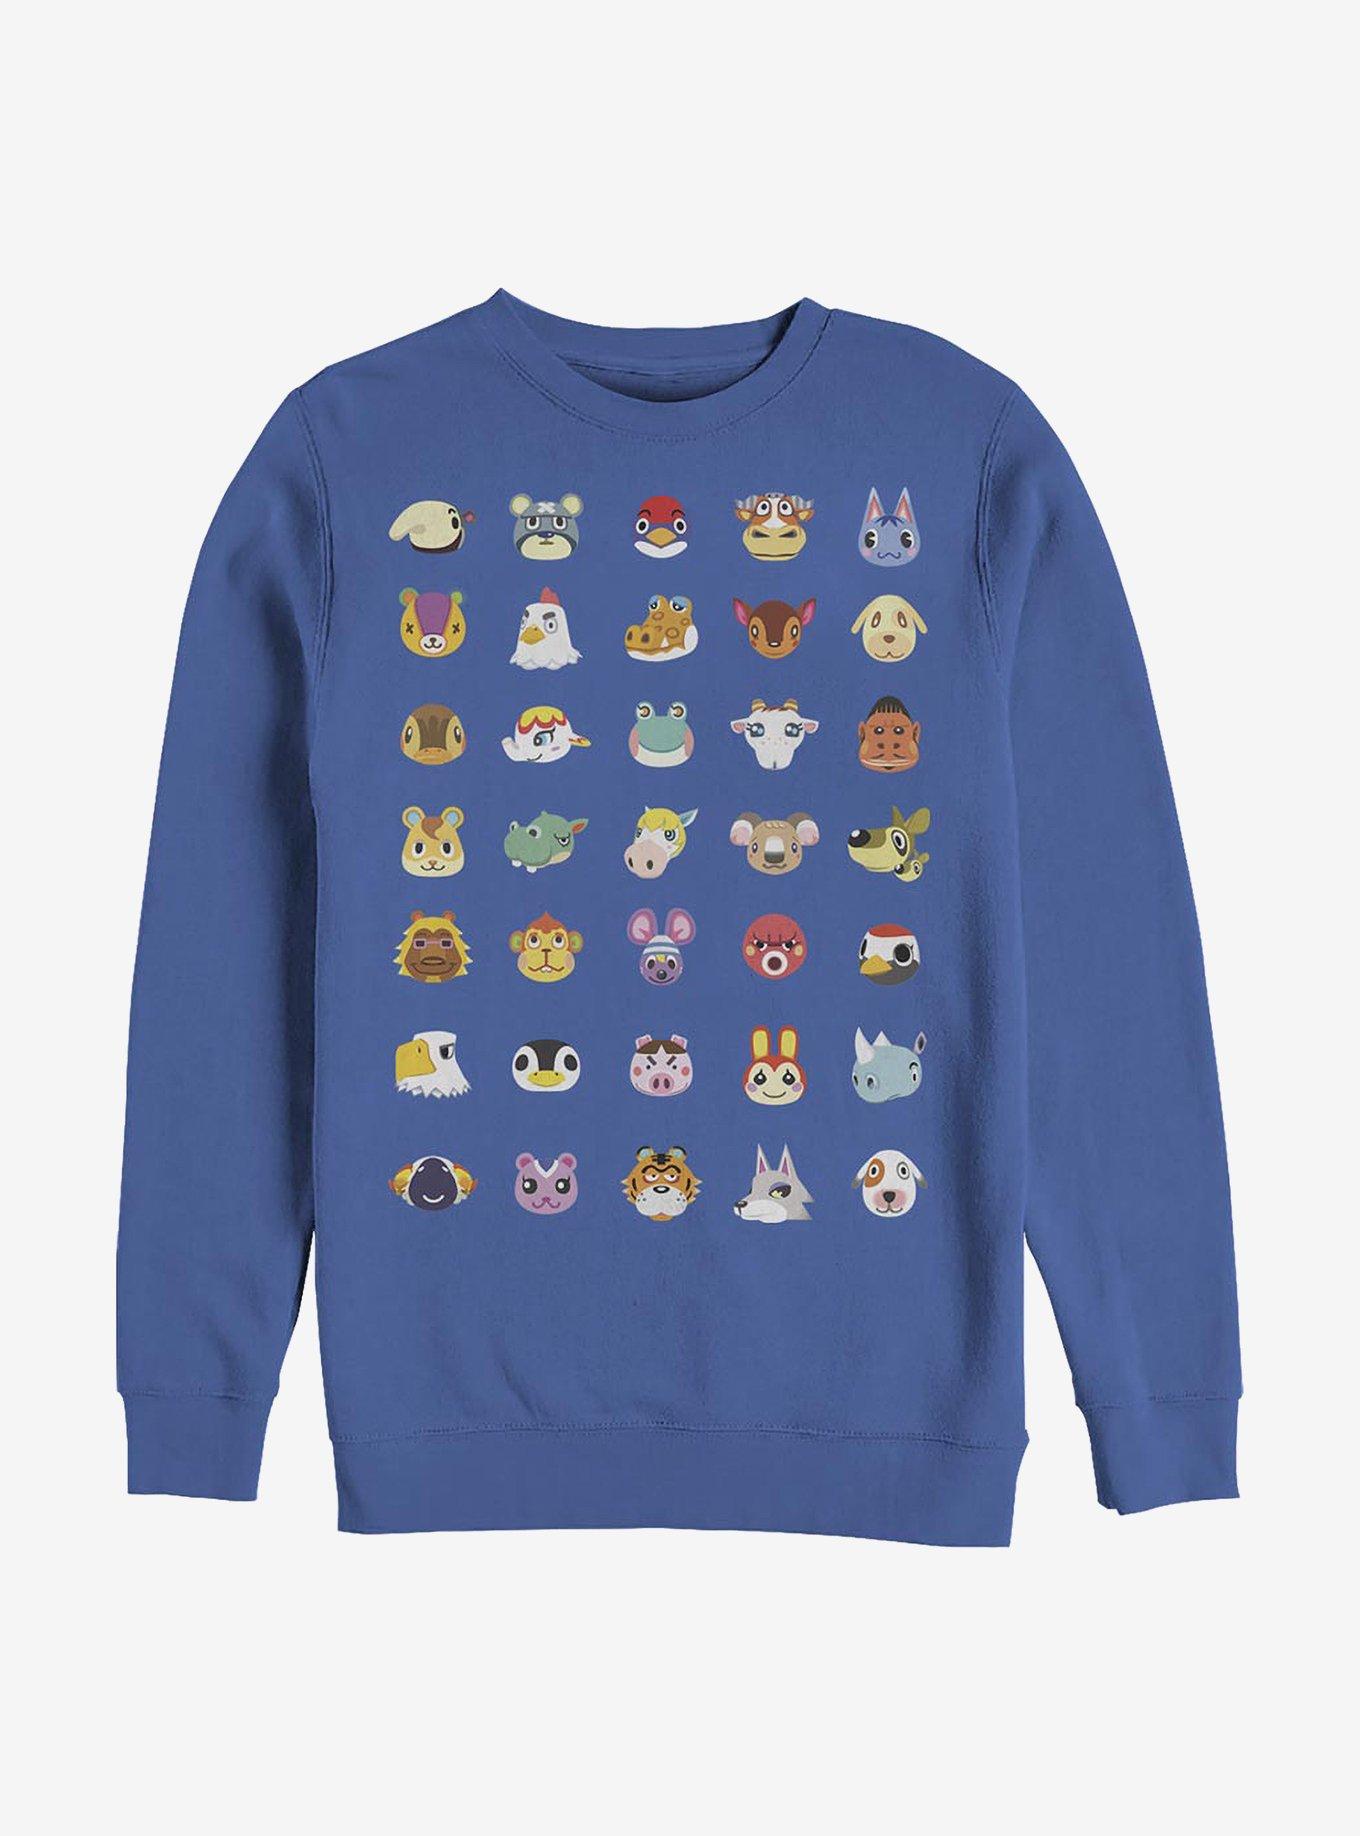 Nintendo Animal Crossing Character Heads Crew Sweatshirt, ROYAL, hi-res